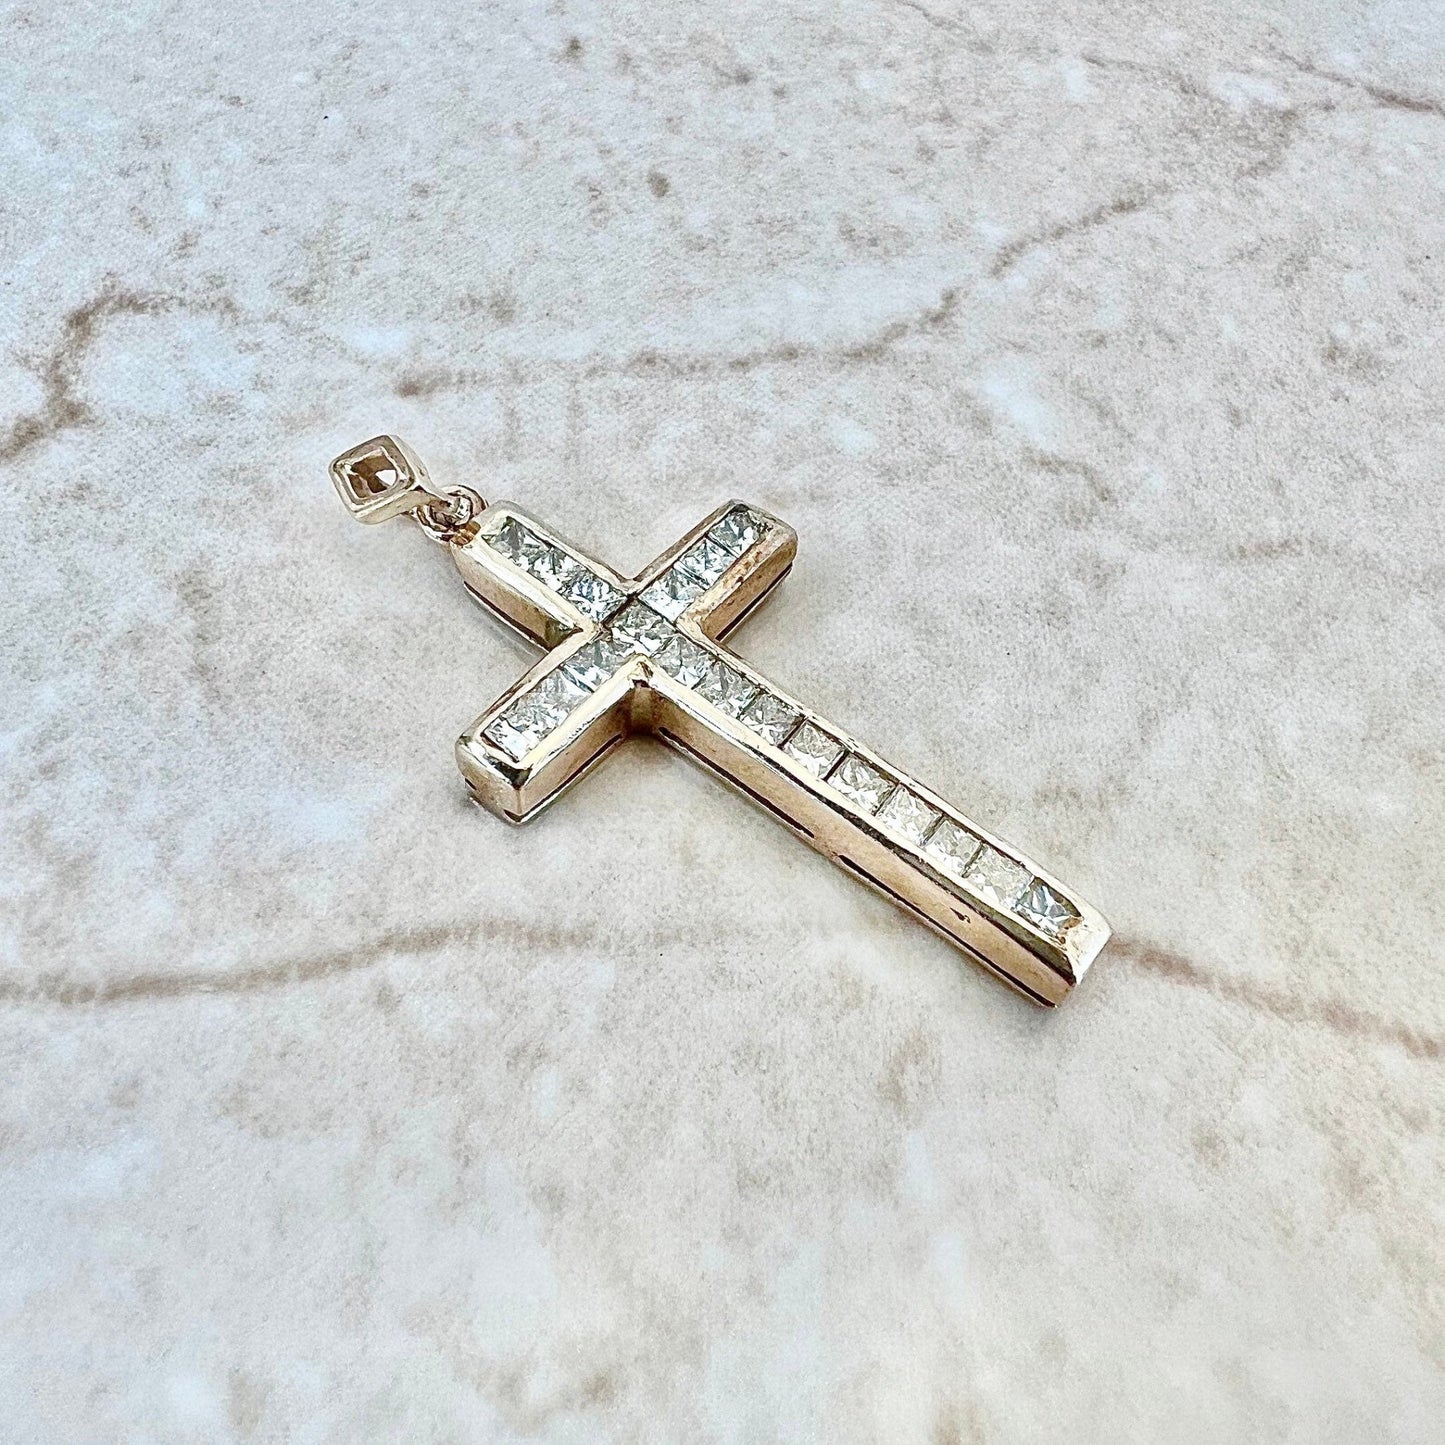 Vintage 14K Diamond Cross Pendant Necklace - Yellow Gold Diamond Cross - Christian Pendant -Religious Jewelry -Best Gift For Her